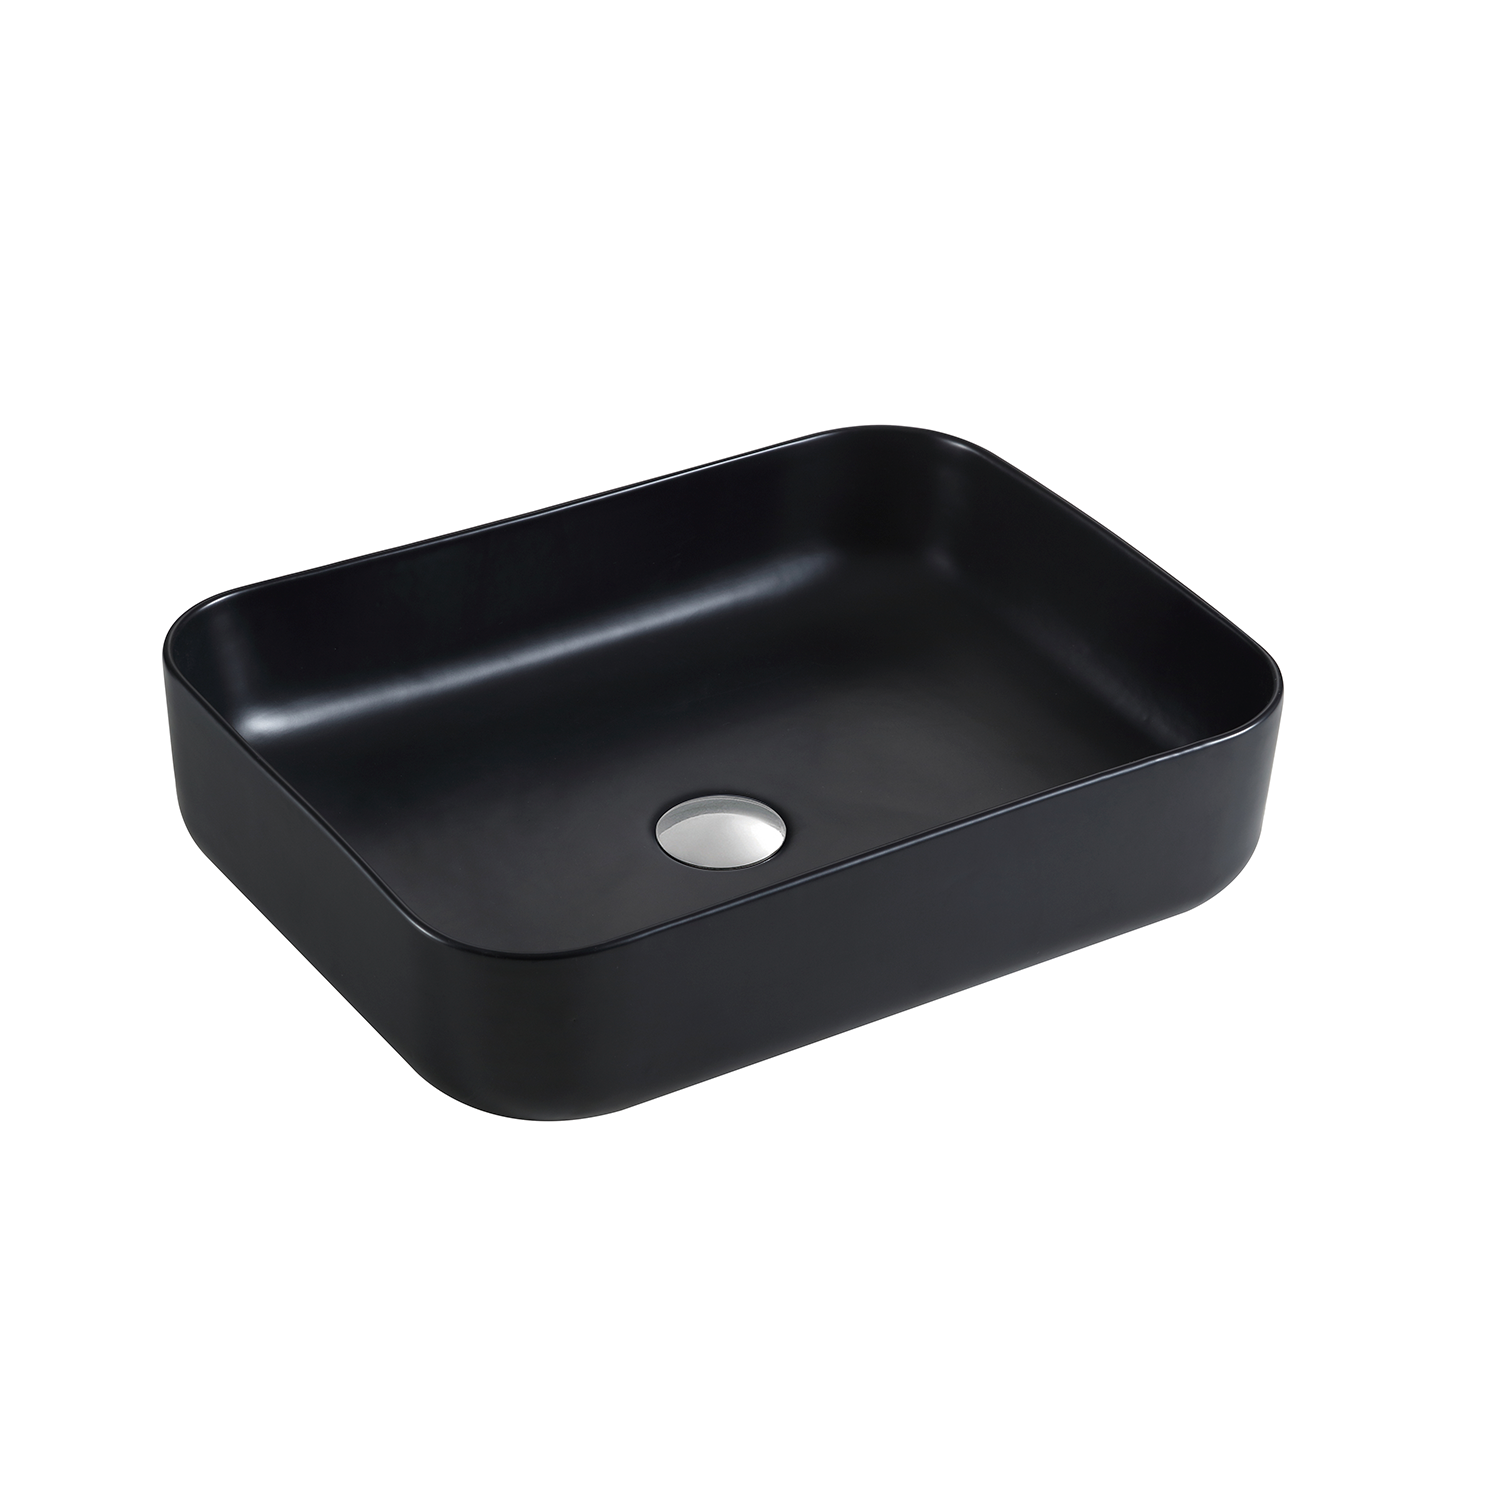 DAX  Ceramic Rectangle Bathroom Vessel Basin White Glossy - (20" x 16.5") (DAX-CL1285-WG)